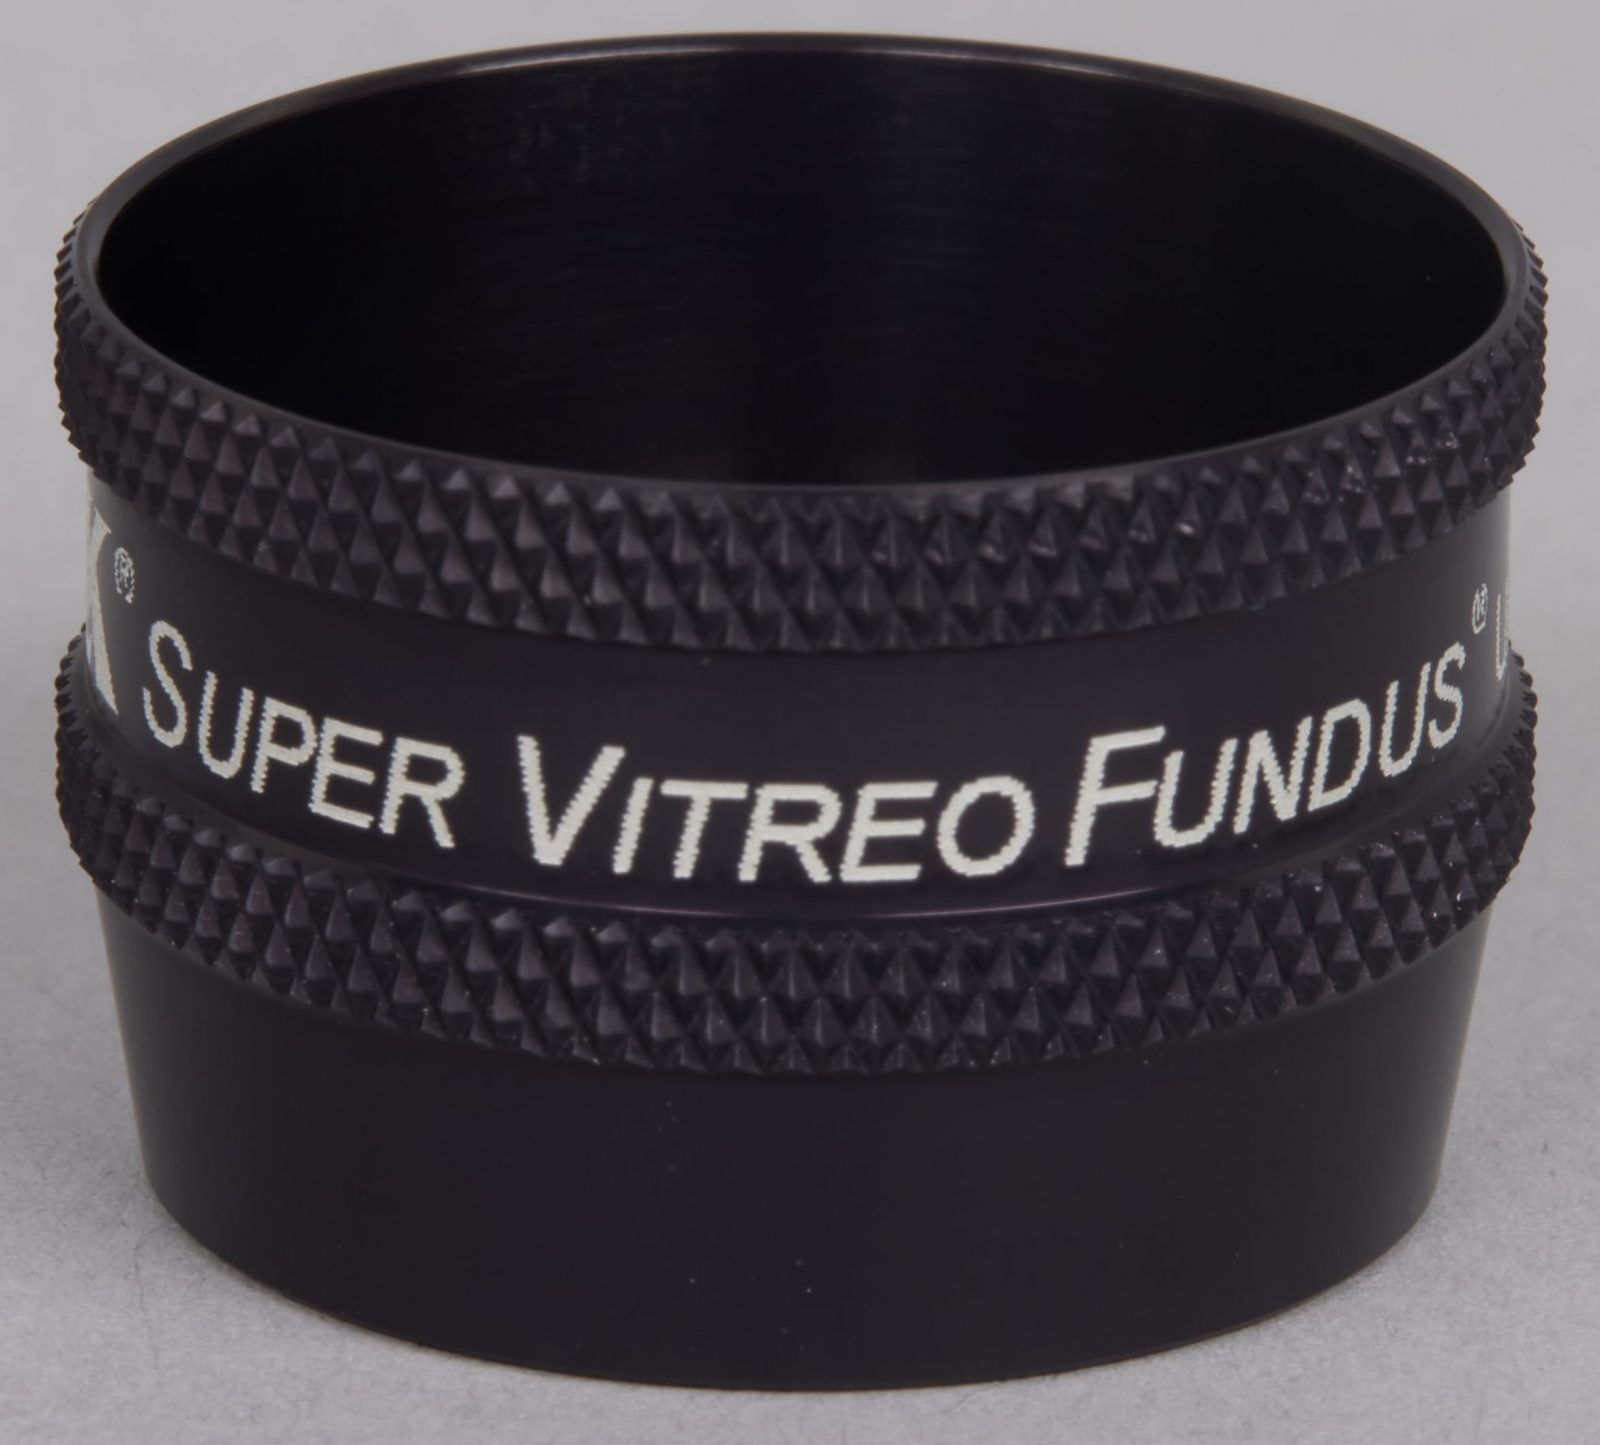 Super VitreoFundus®